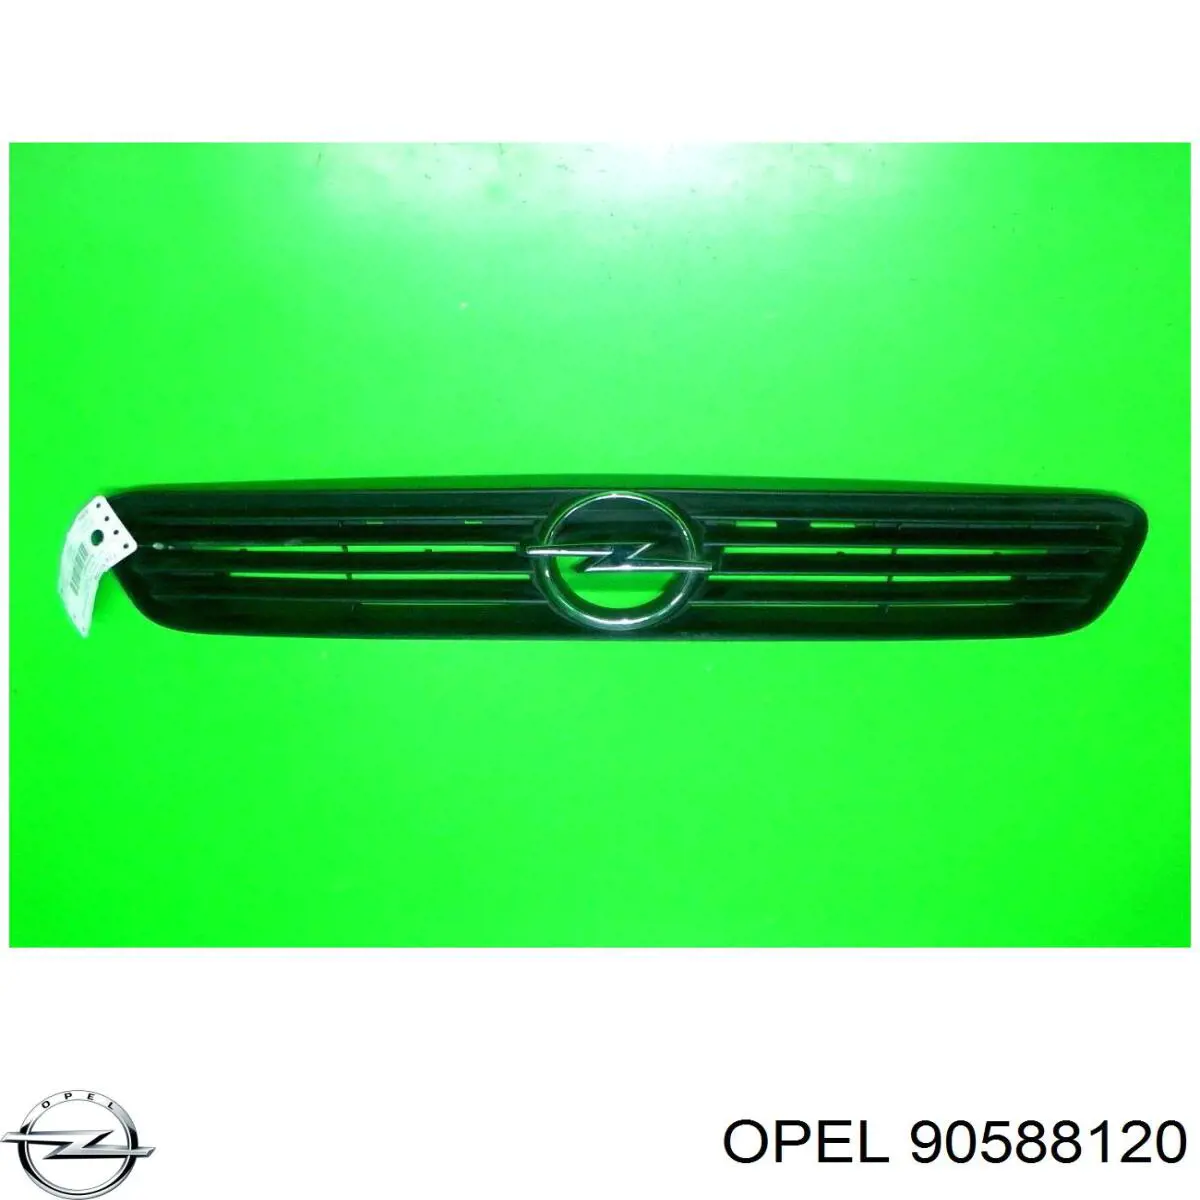 90588120 Opel grelha do radiador